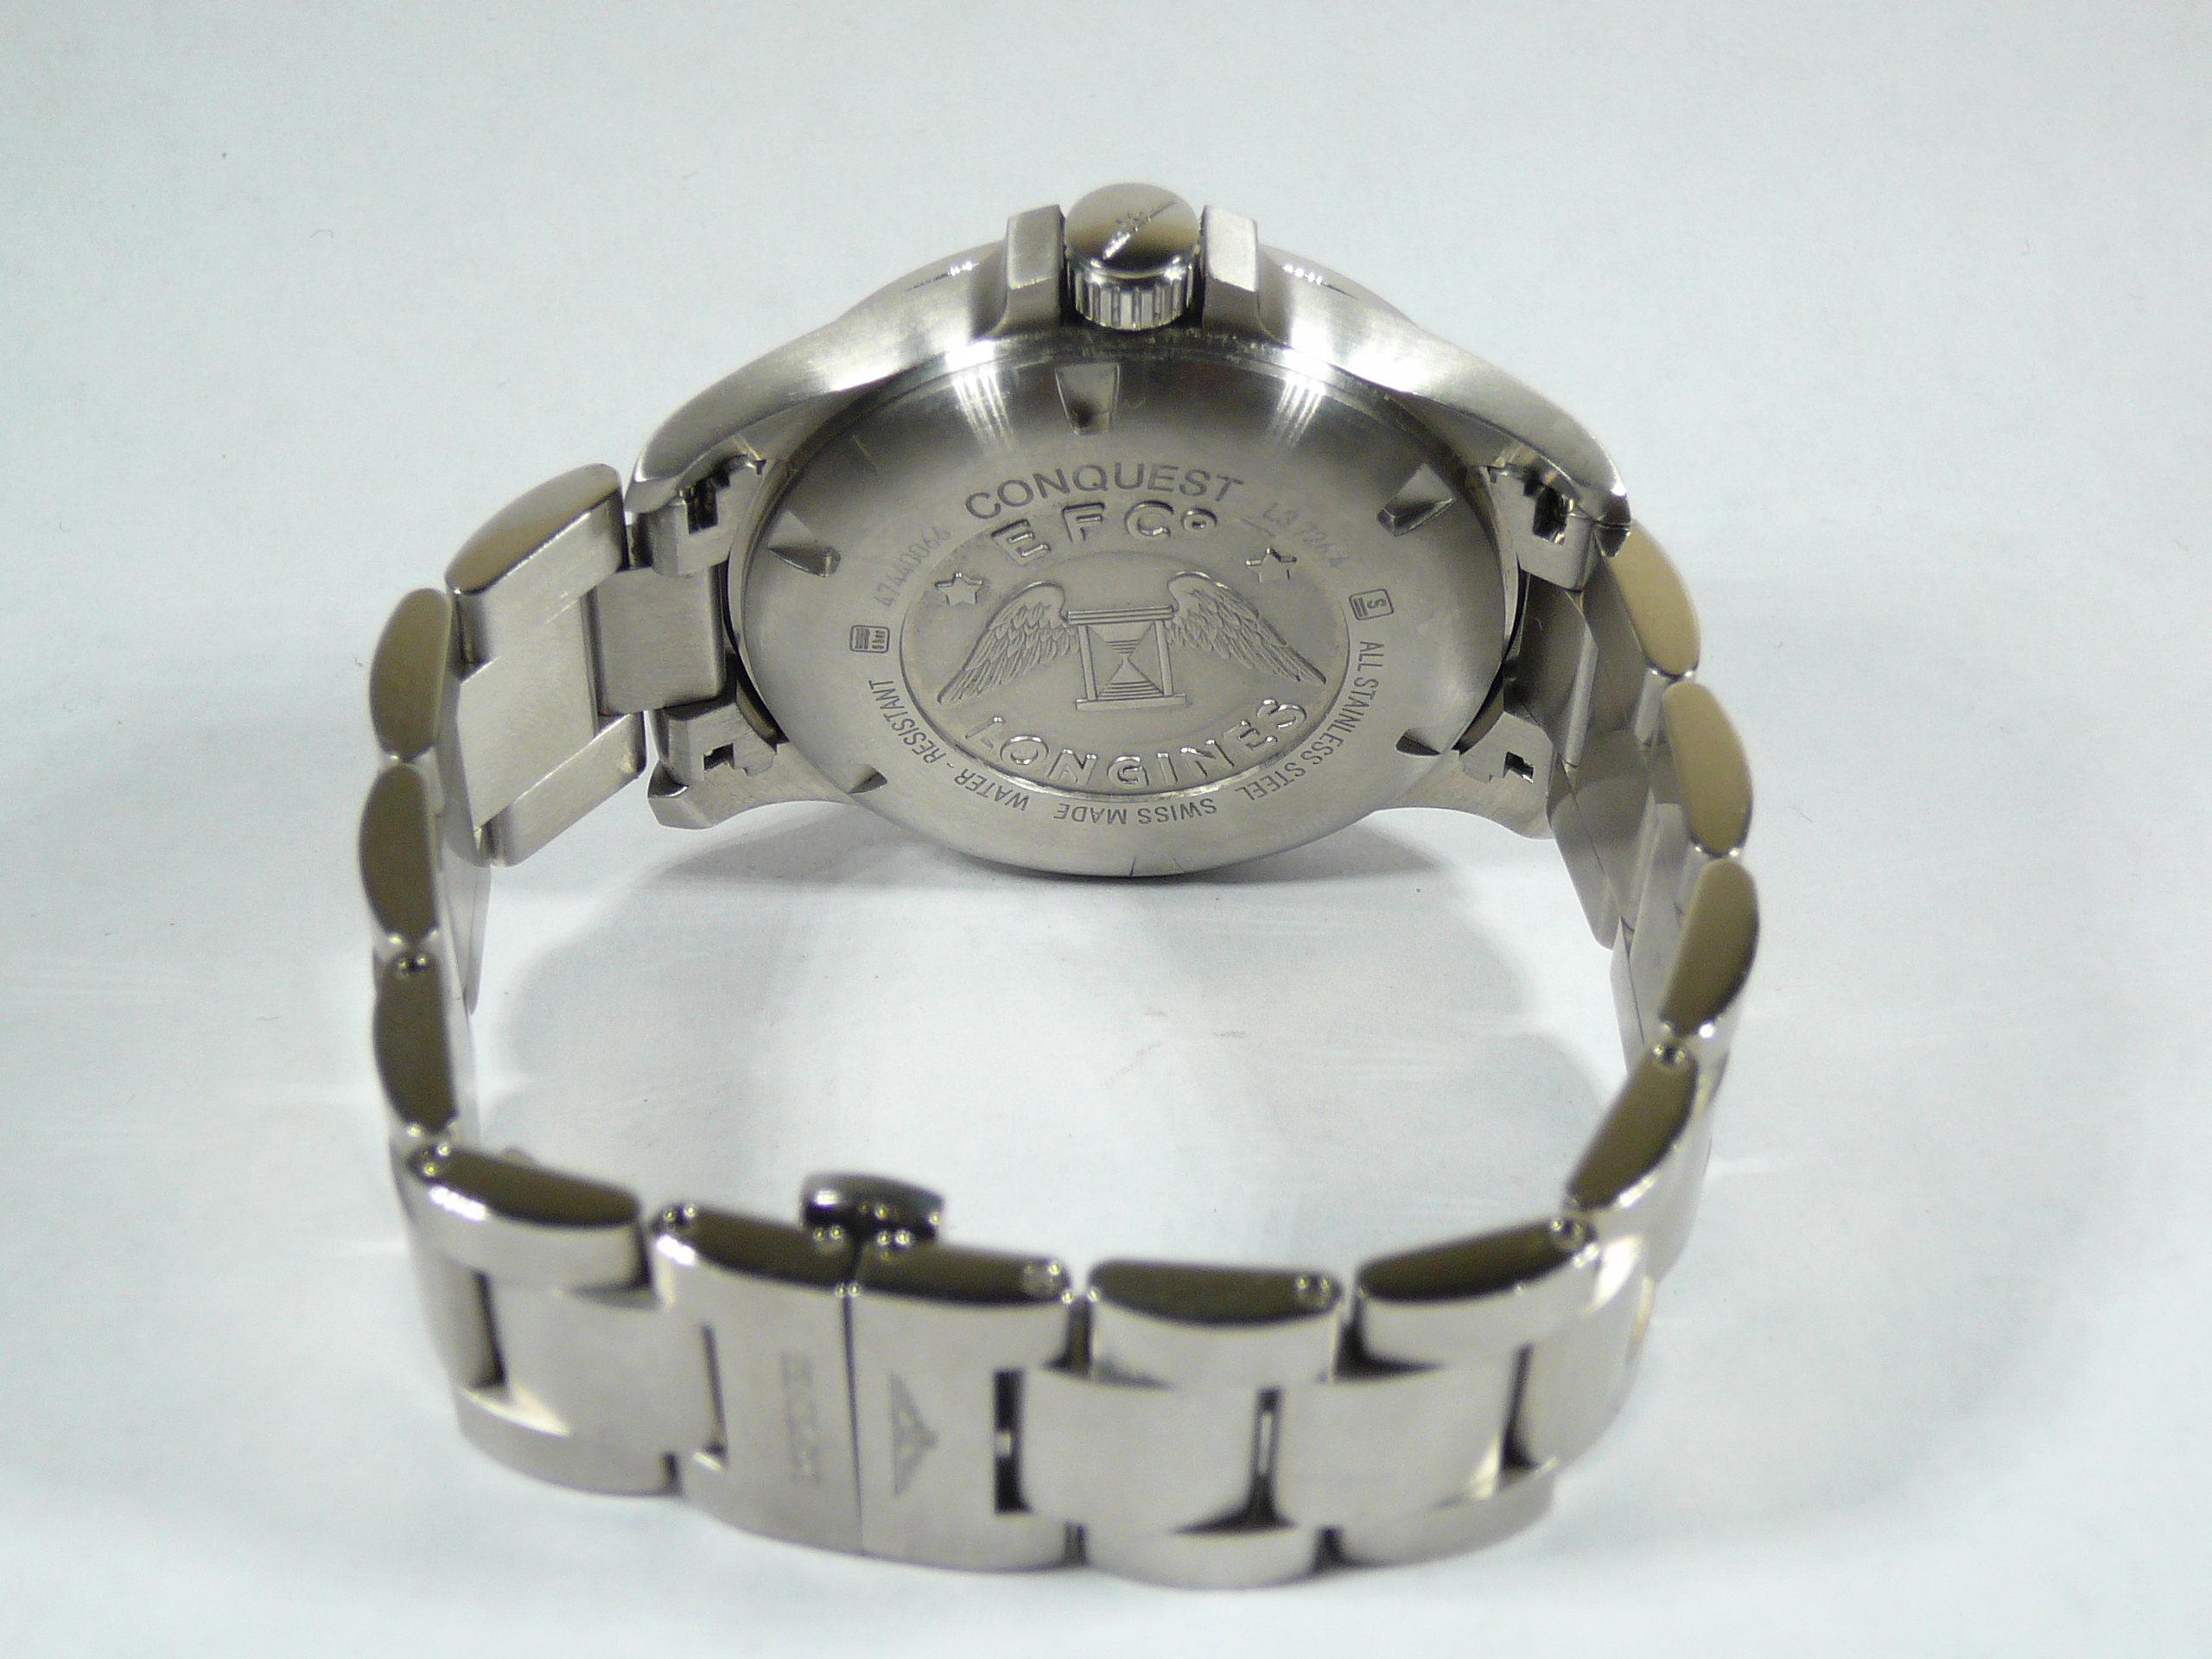 Gents Longines Wrist Watch - Image 3 of 3